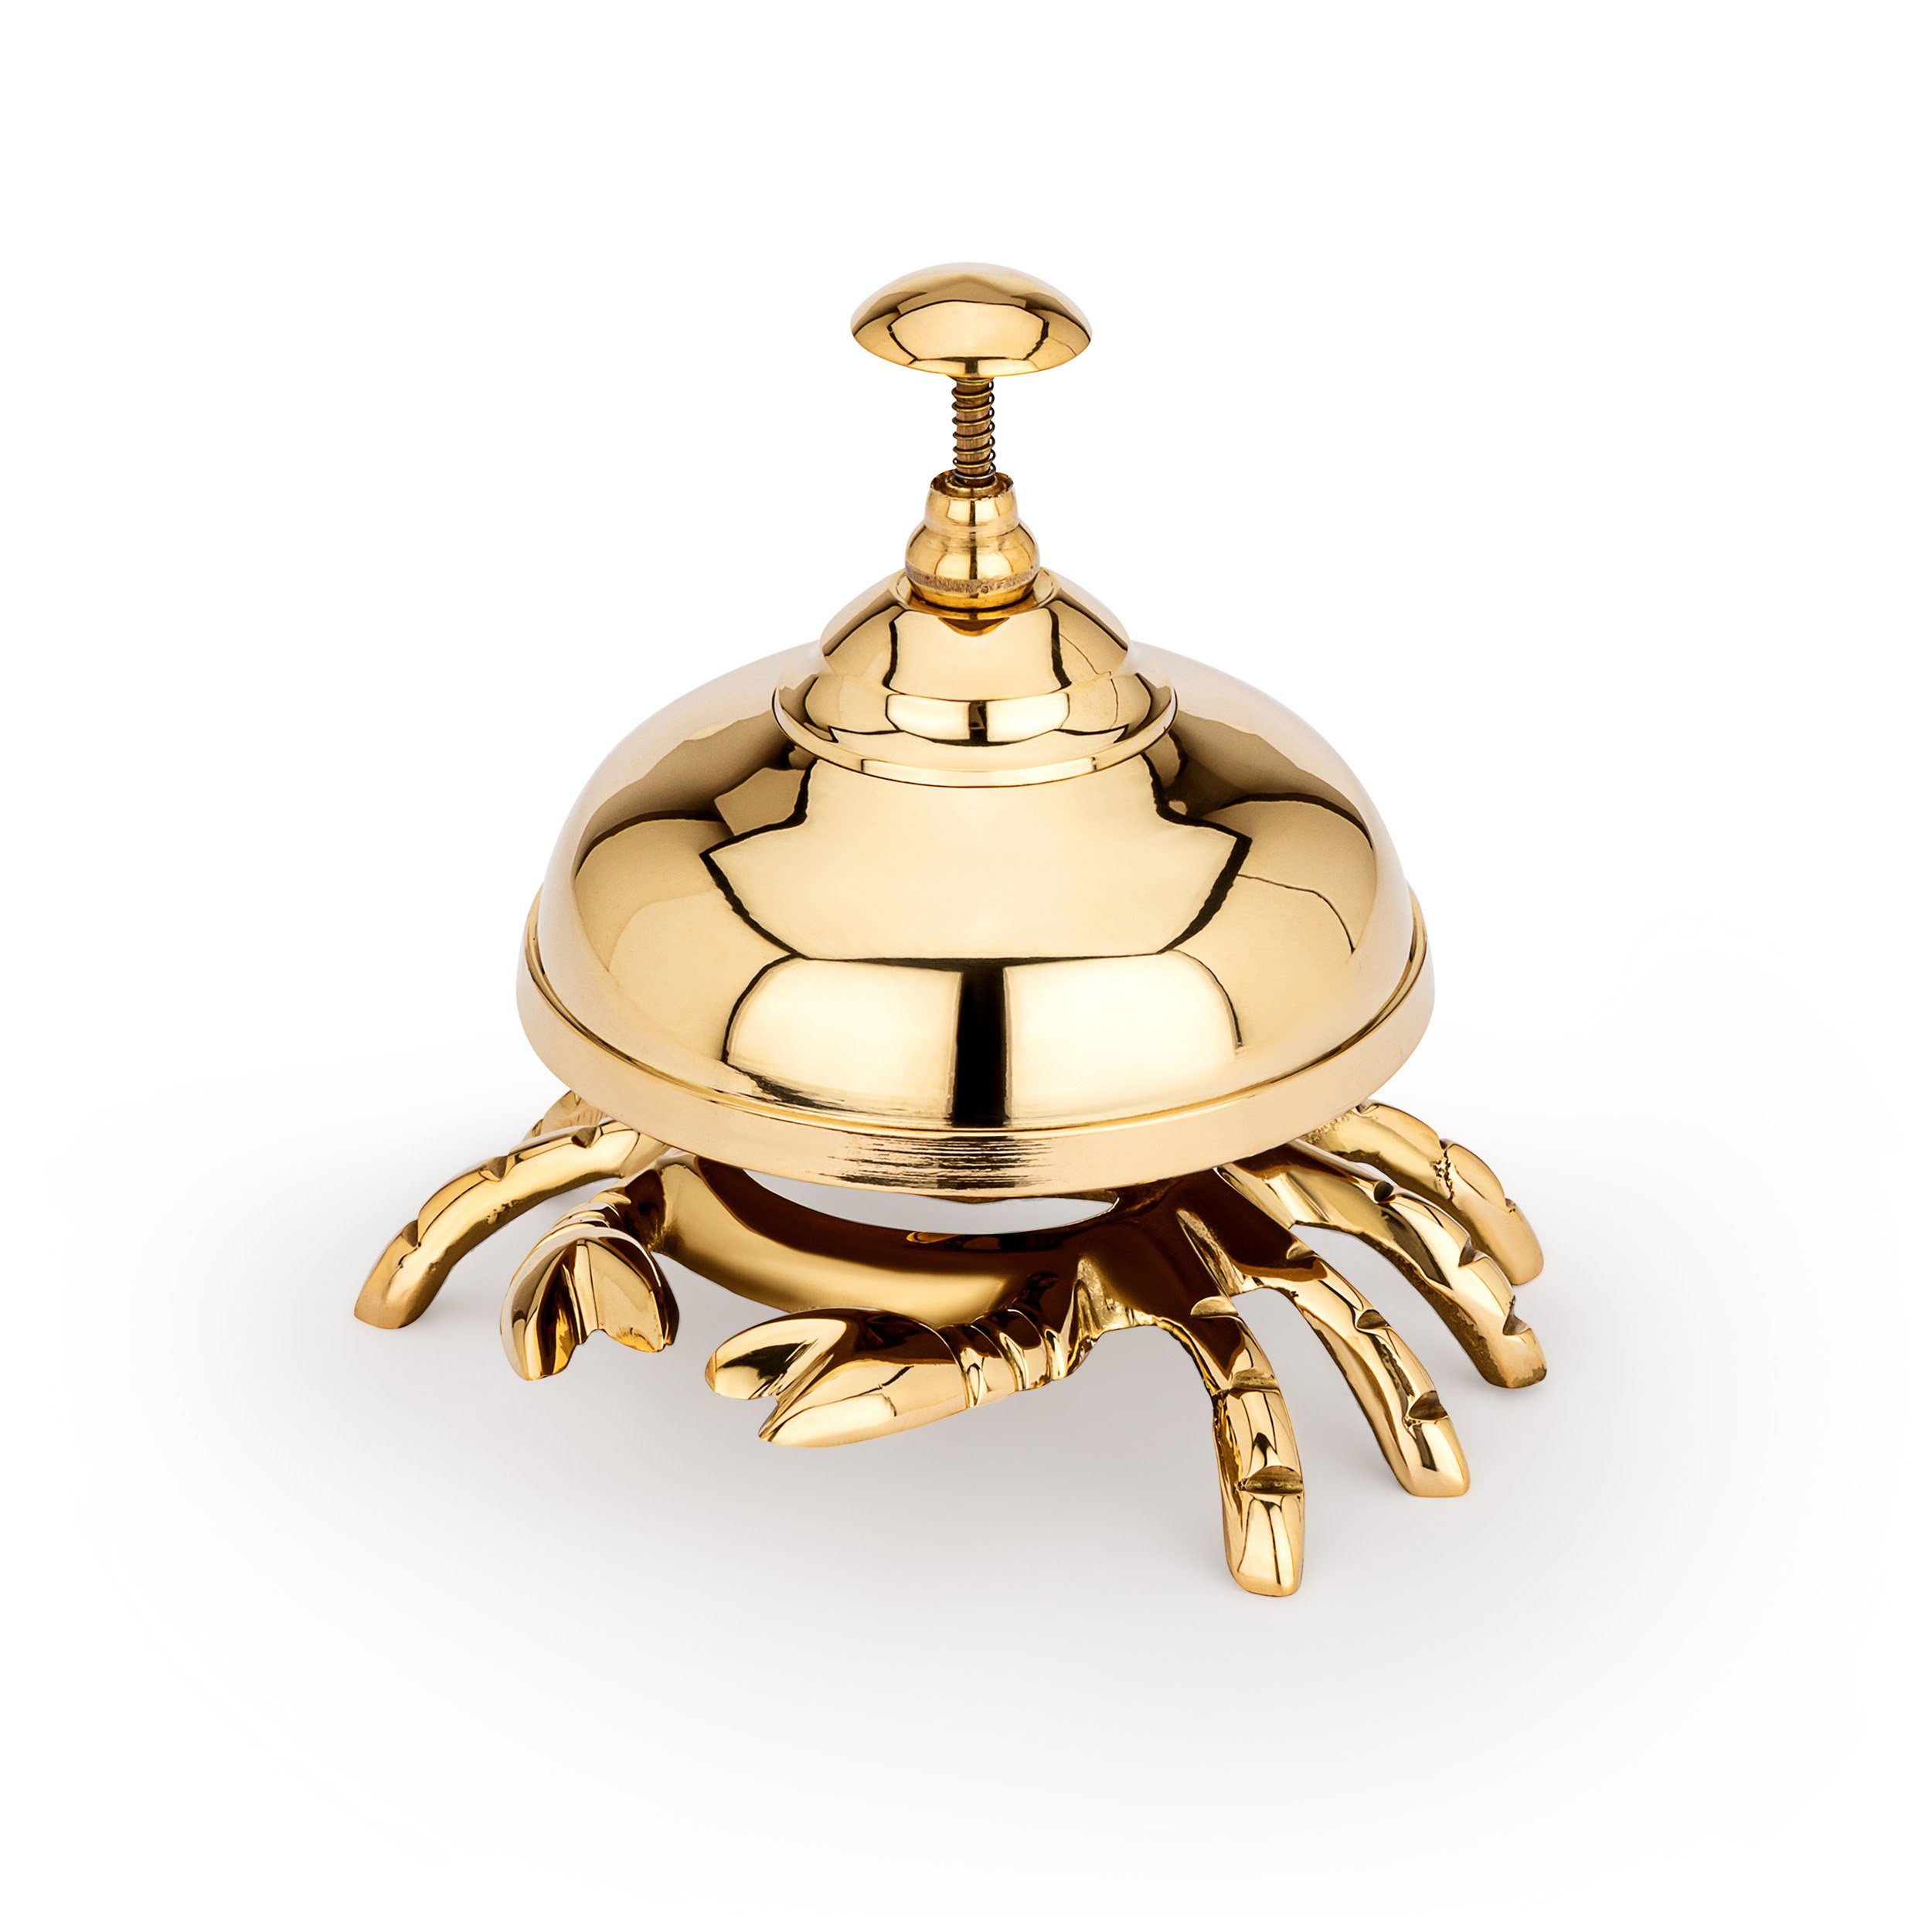 Tresenglocke aus NKlaus Maritim hoch Dekofigur Messing Krabbe 9cm gold Tischgloc massiv